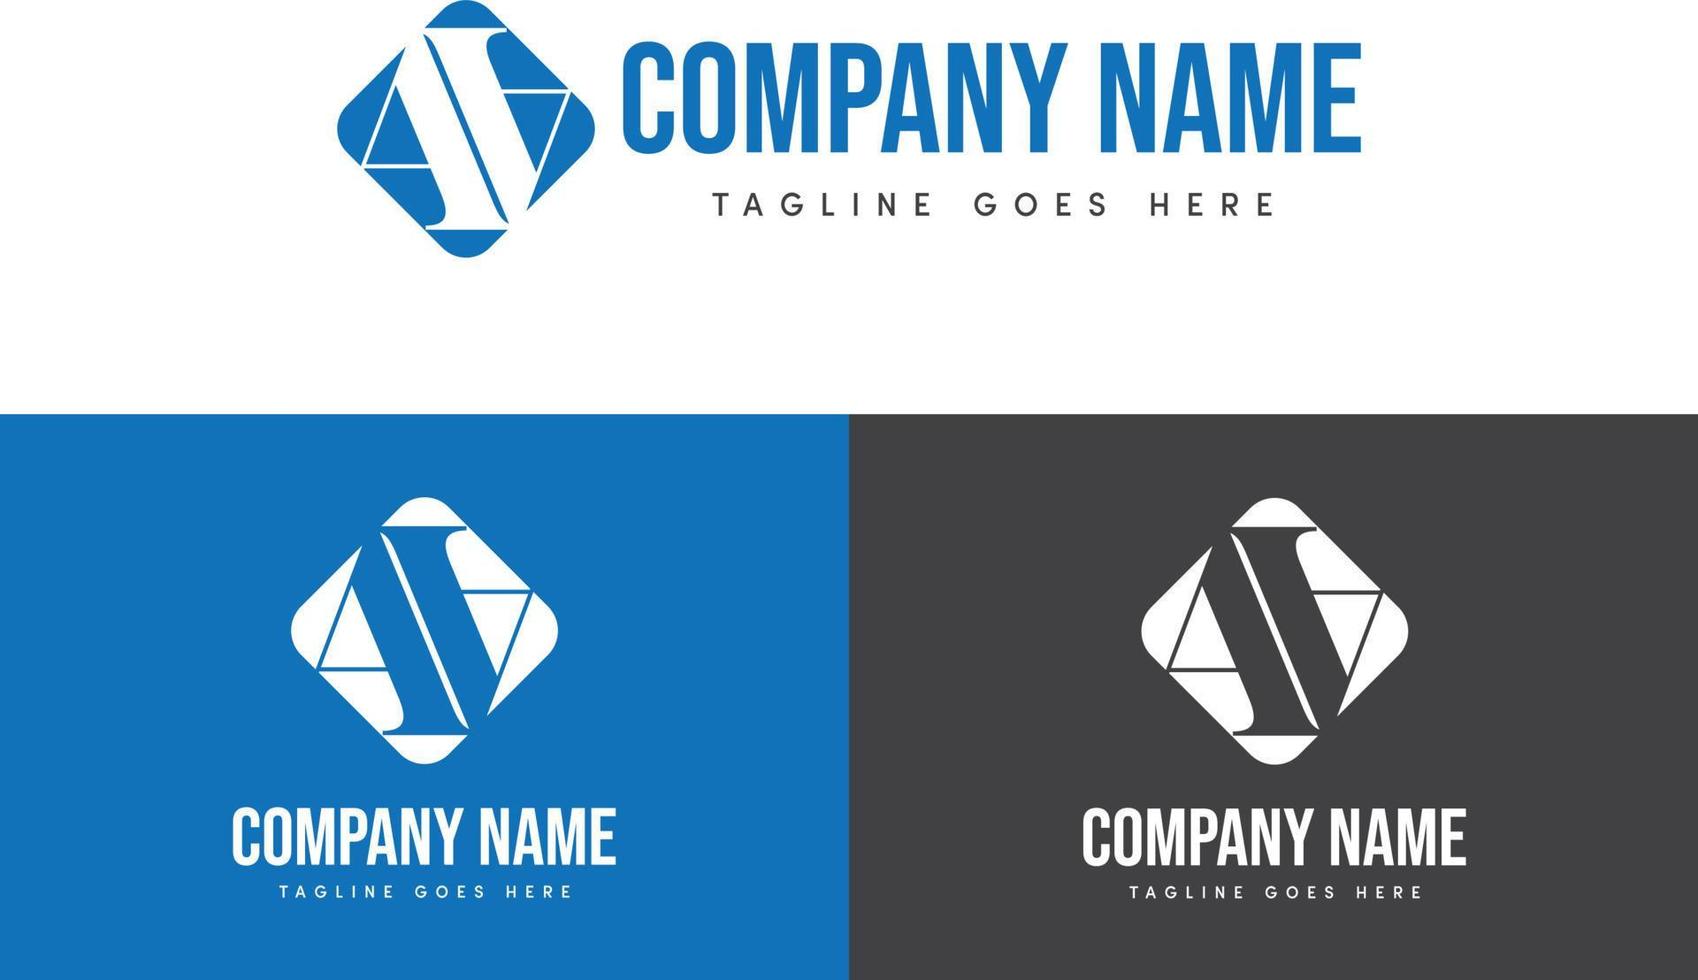 branding identidade corporativo uma logotipo vetor Projeto modelo